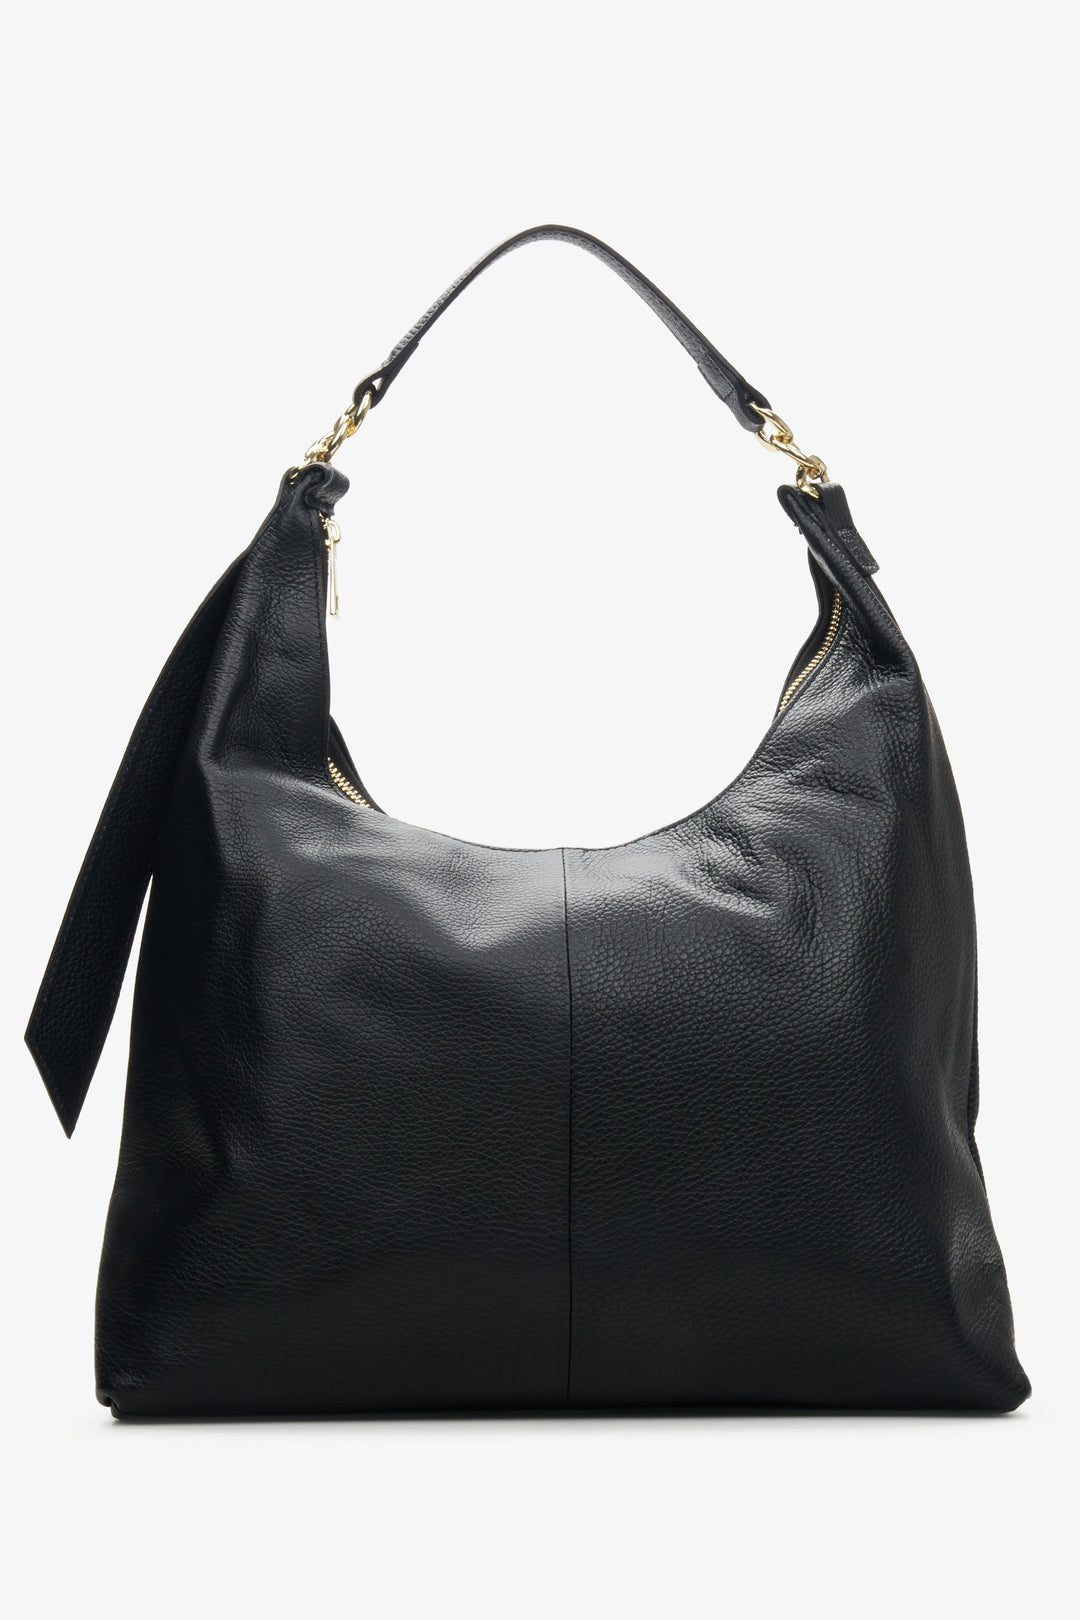 Women's black shopper bag made of Italian genuine leather by Estro.